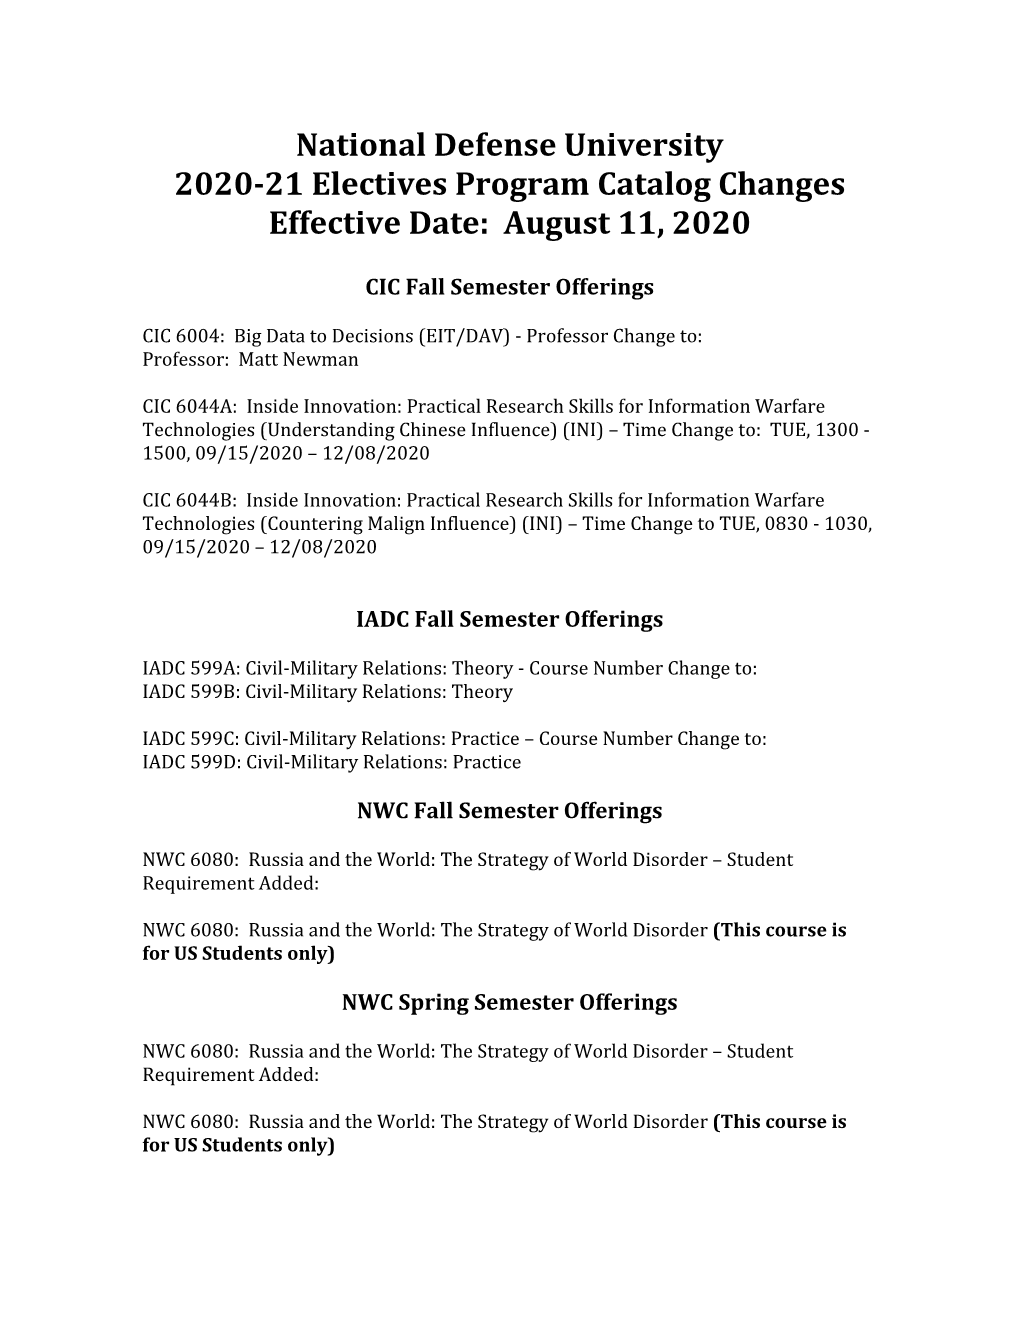 National Defense University 2020-21 Electives Program Catalog Changes Effective Date: August 11, 2020